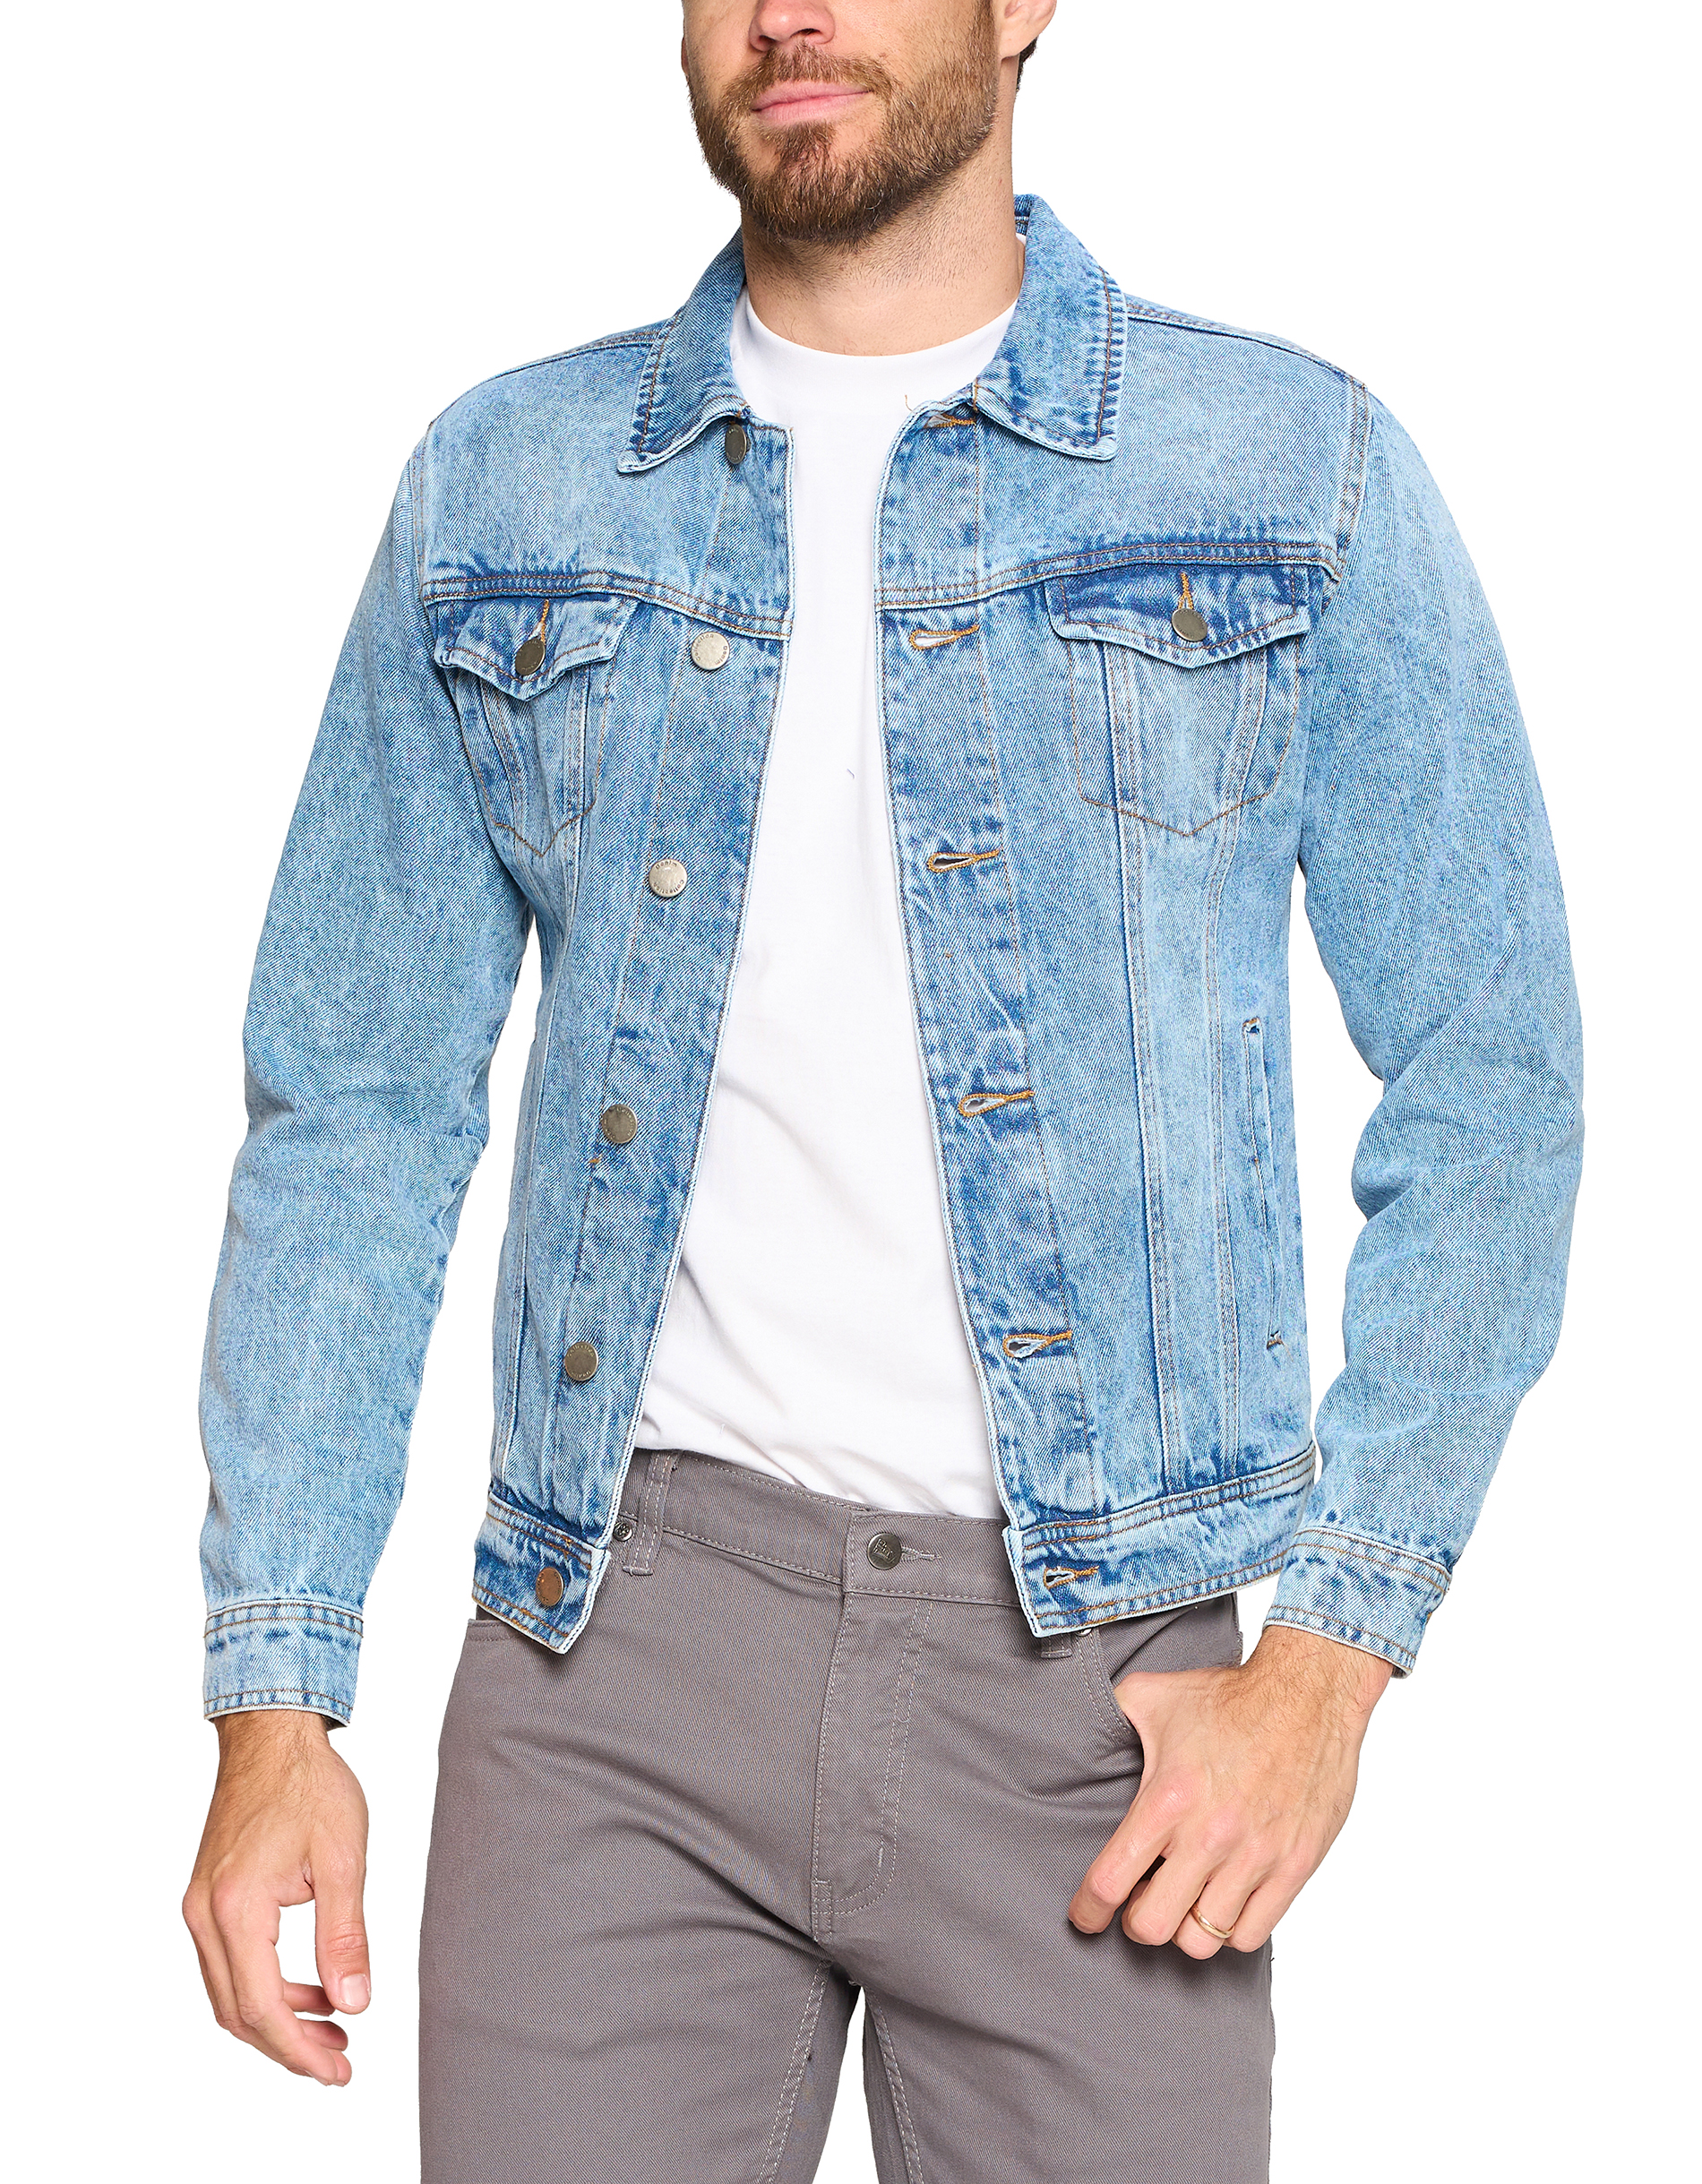 Red Label Men’s Premium Casual Faded Denim Jean Button Up Cotton Slim Fit Jacket (Light Blue, L) - image 4 of 7